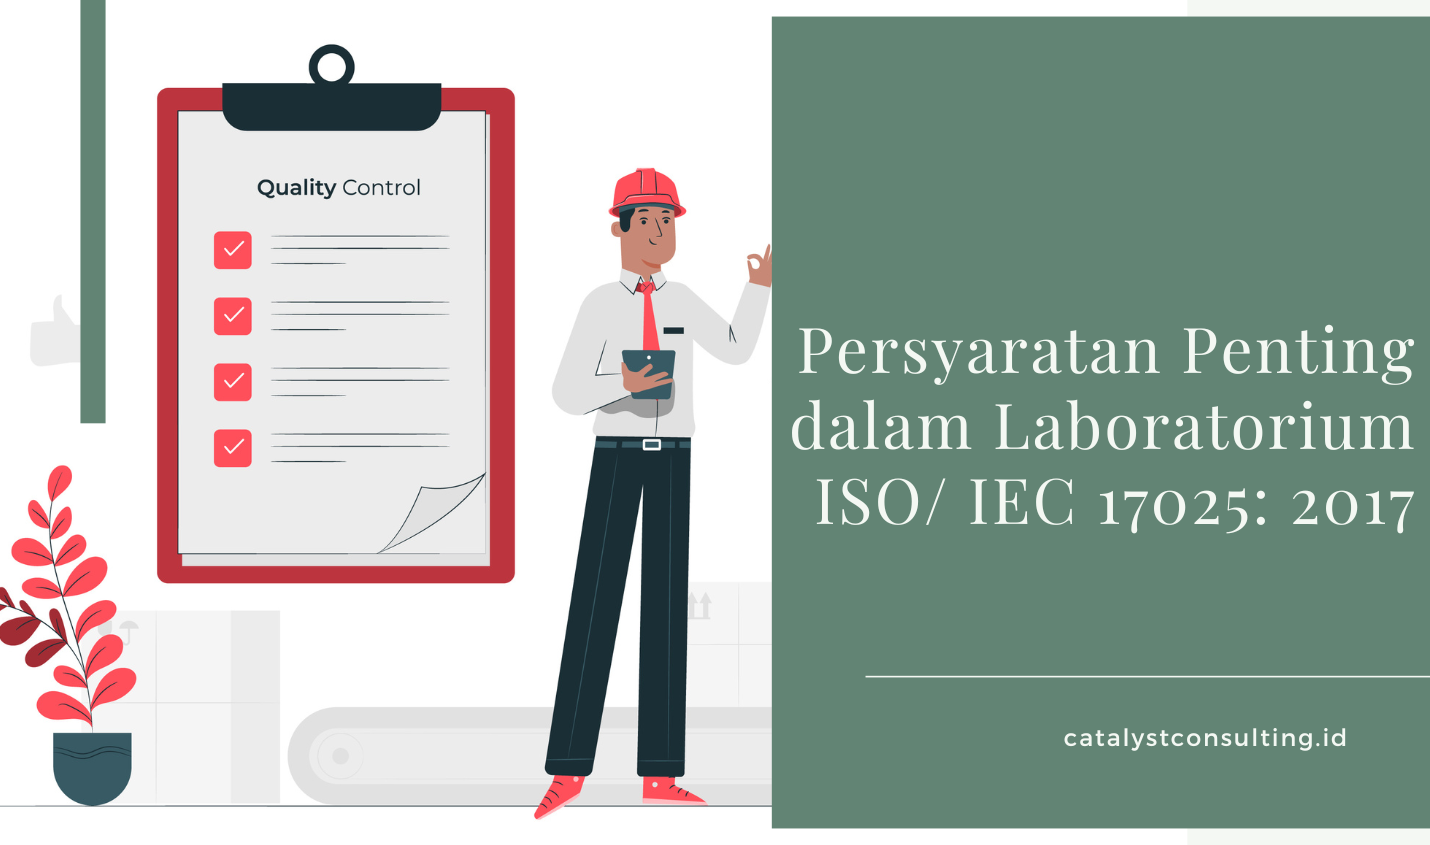 Persyaratan Penting dalam Laboratorium ISO IEC 17025 2017